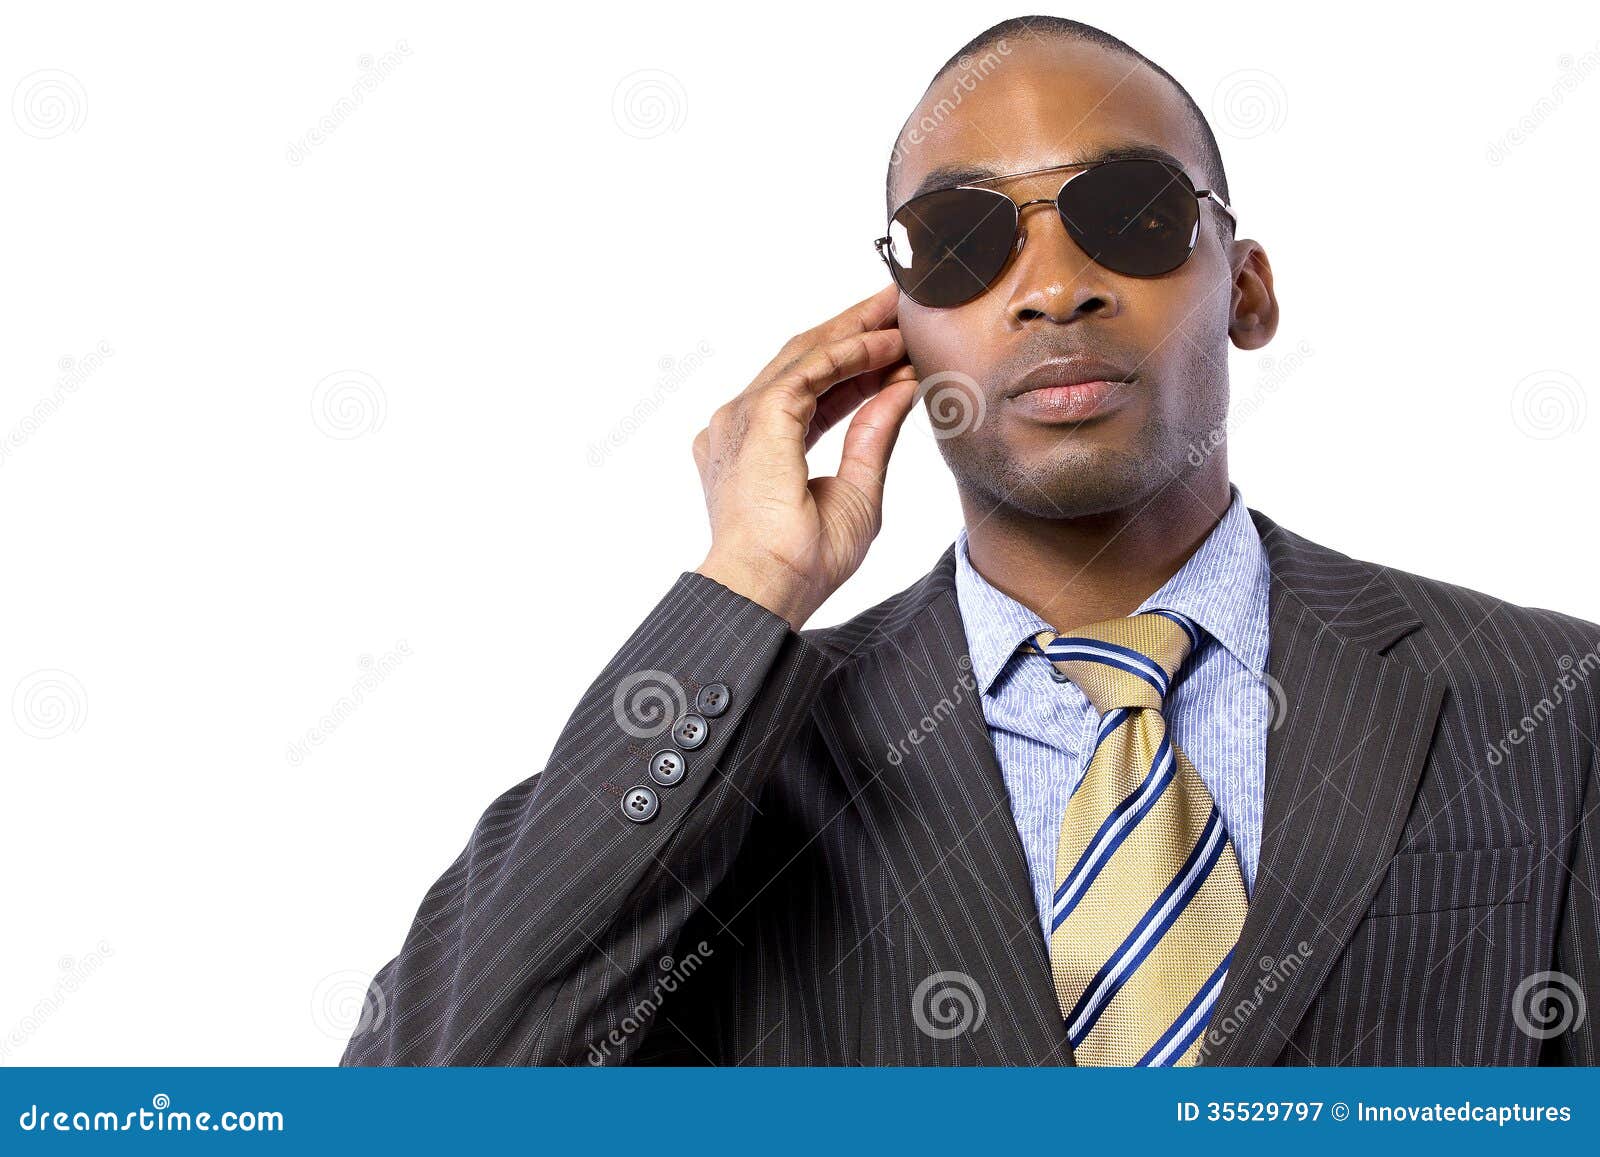 government-agent-black-male-bodyguard-wearing-sunglasses-black-suit-35529797.jpg